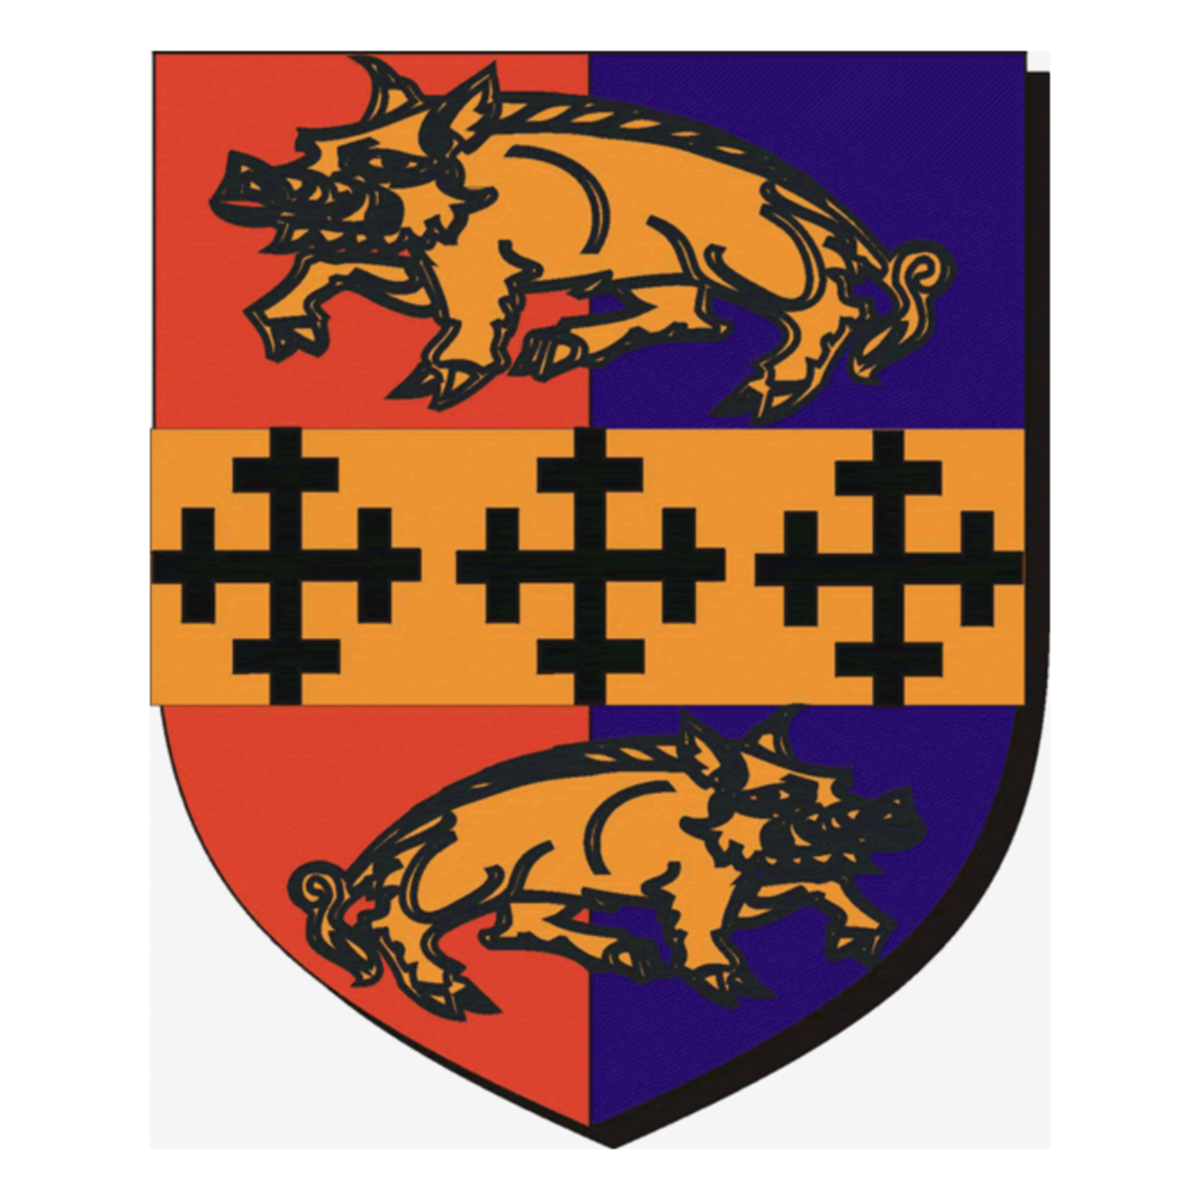 Wappen der FamilieSullivan